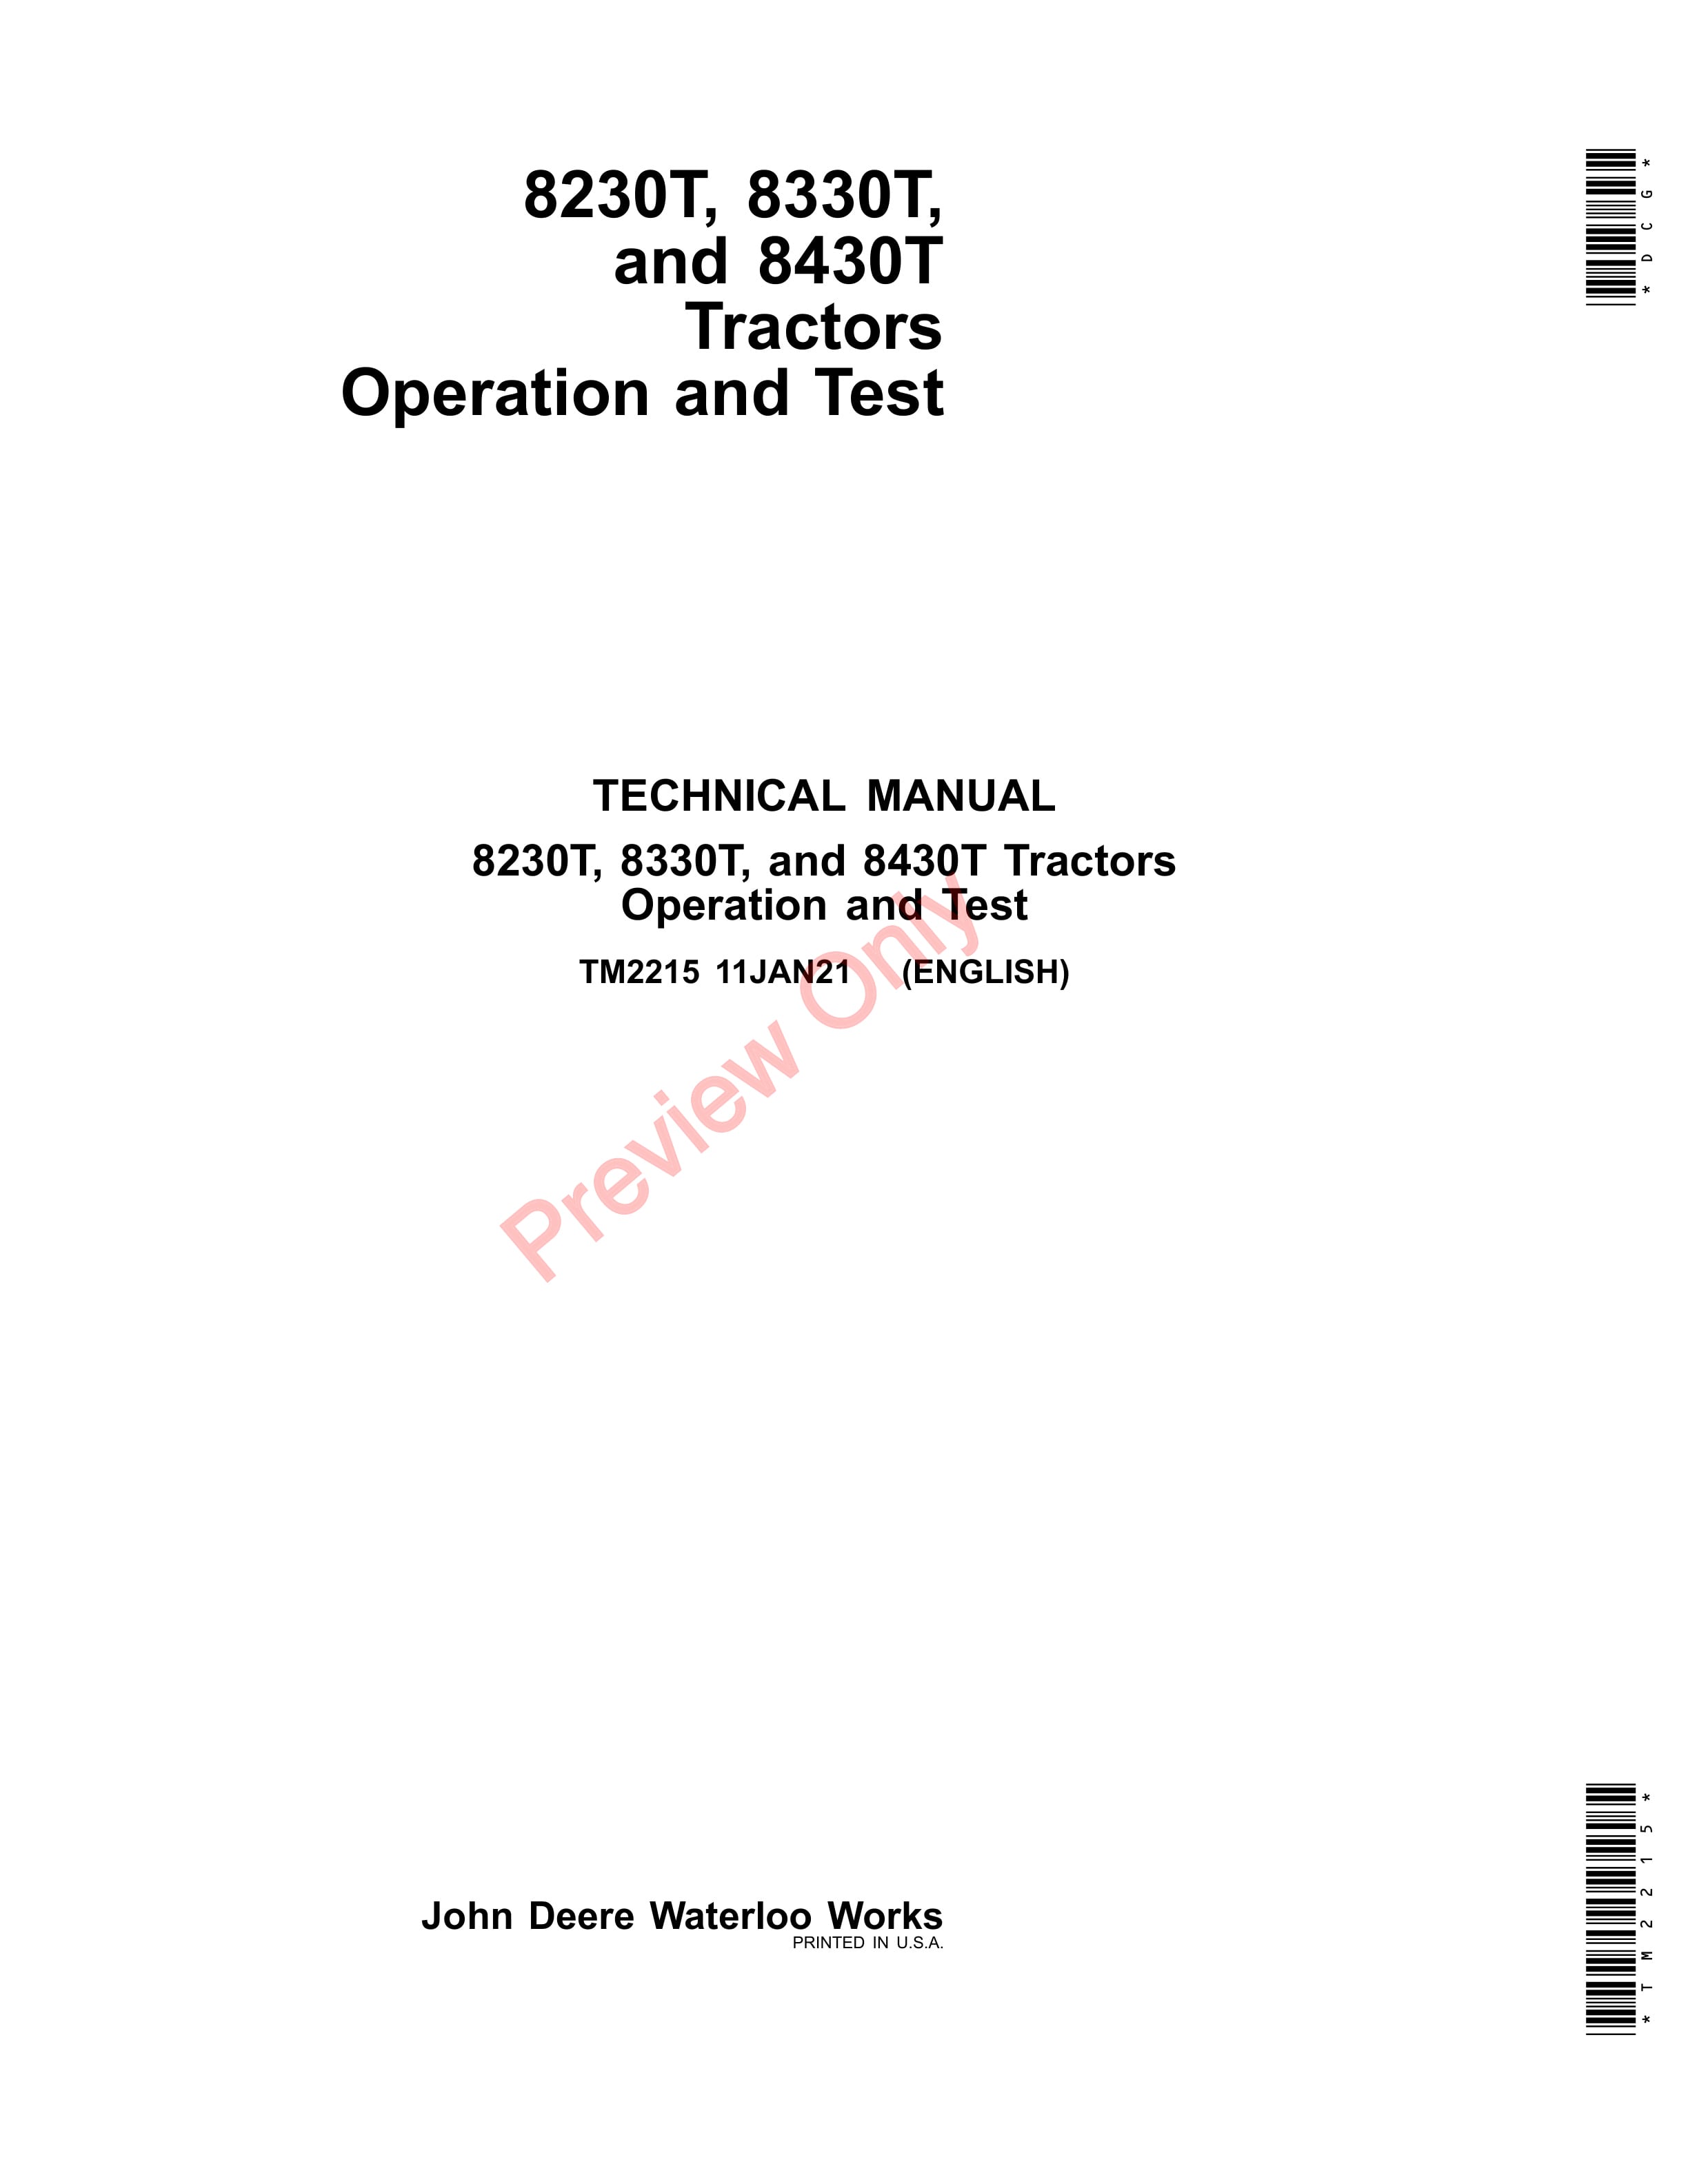 John Deere 8230T 8330T and 8430T Tractors Technical Manual TM2215 11JAN21 1